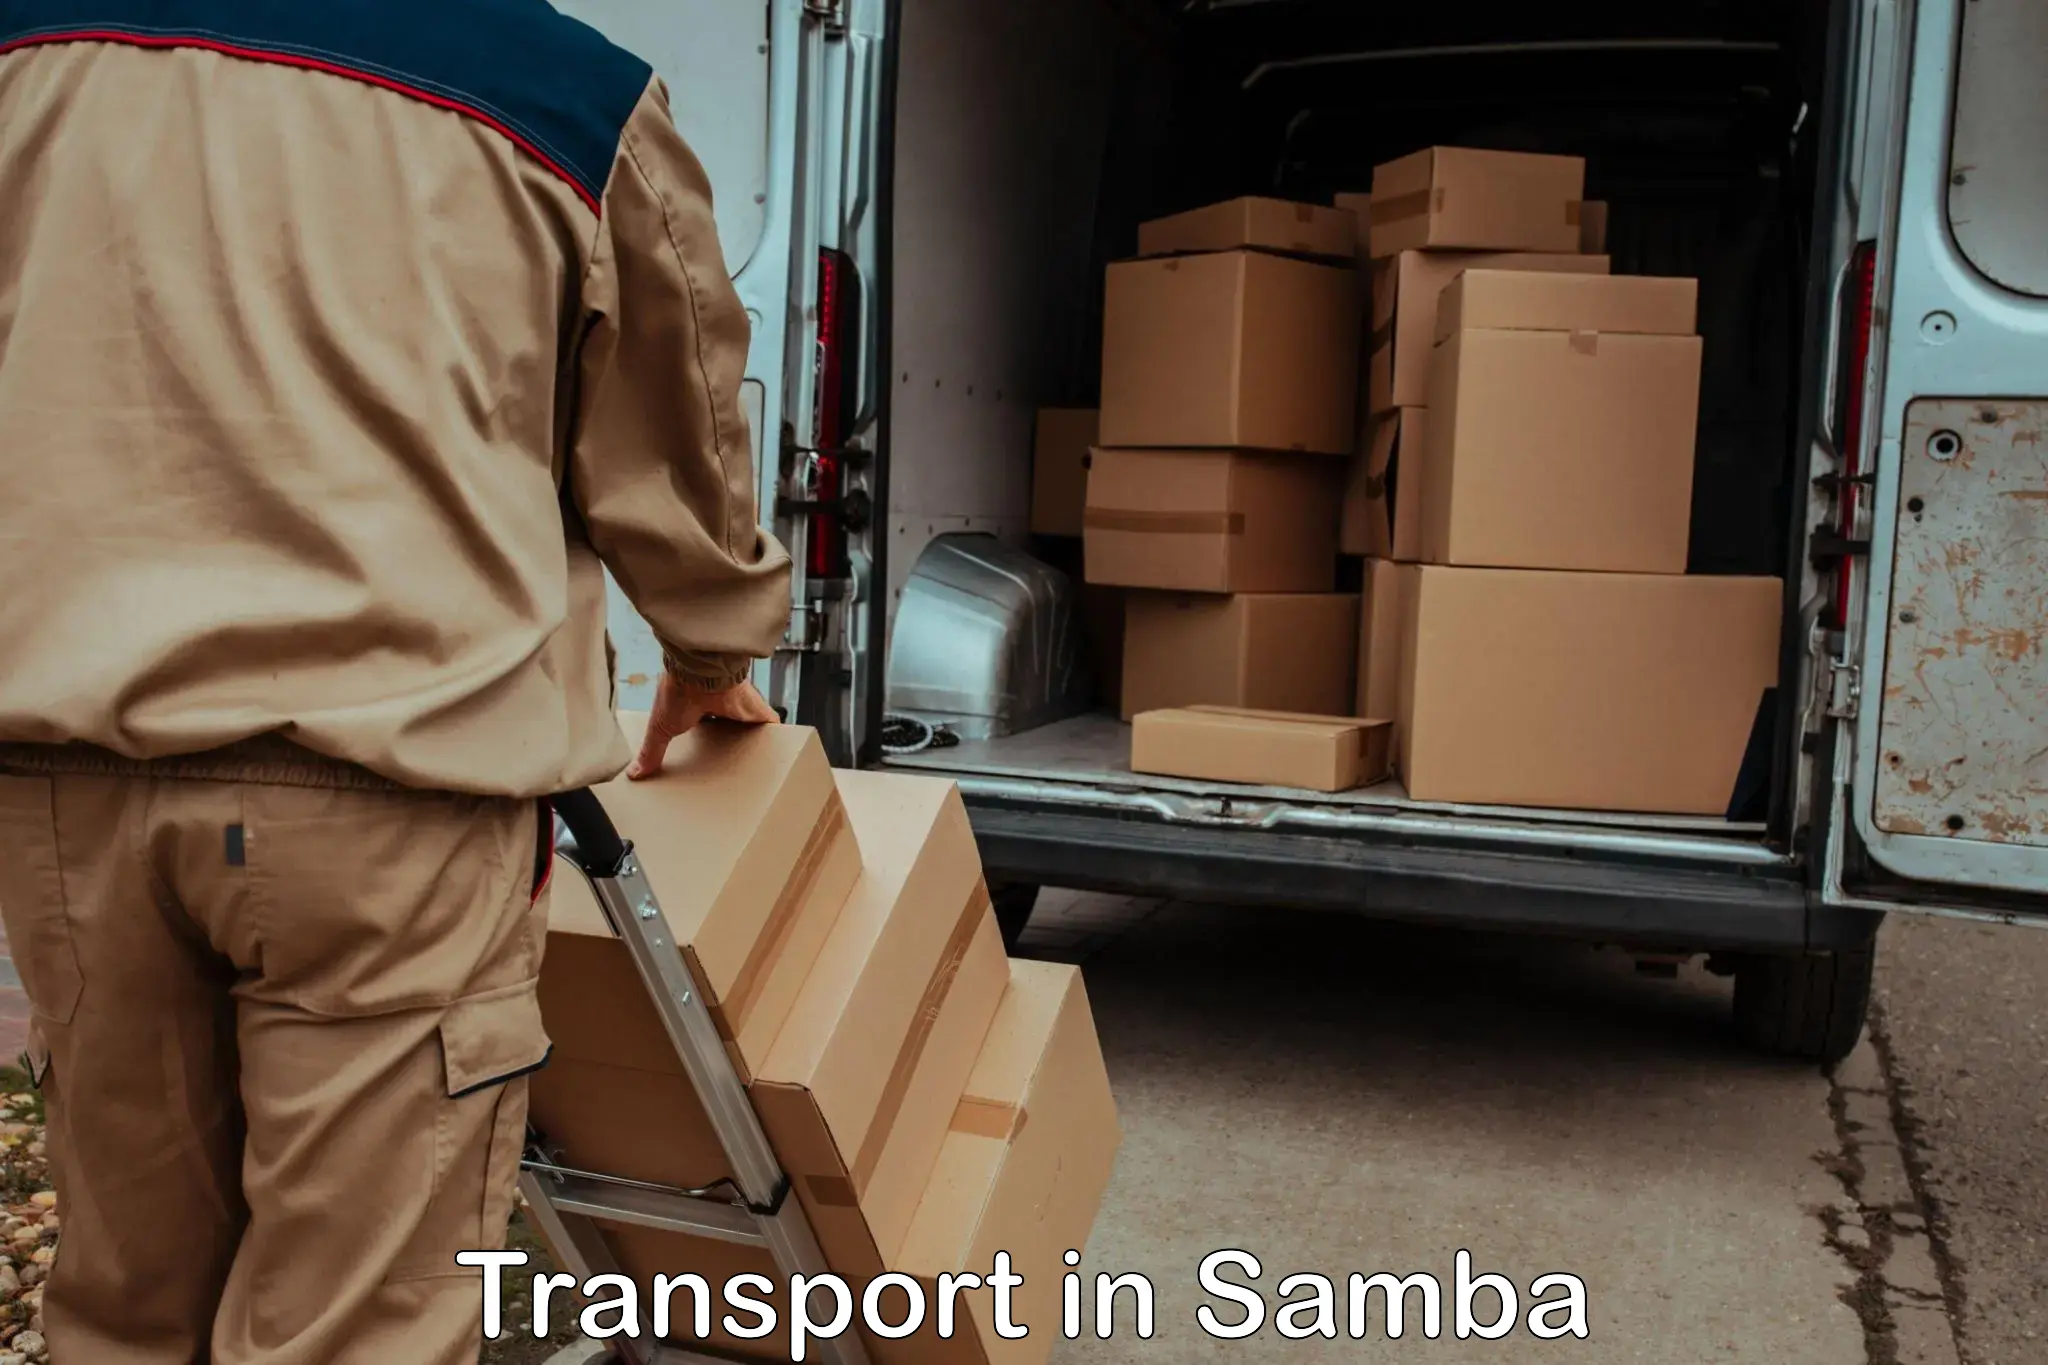 Delivery service in Samba